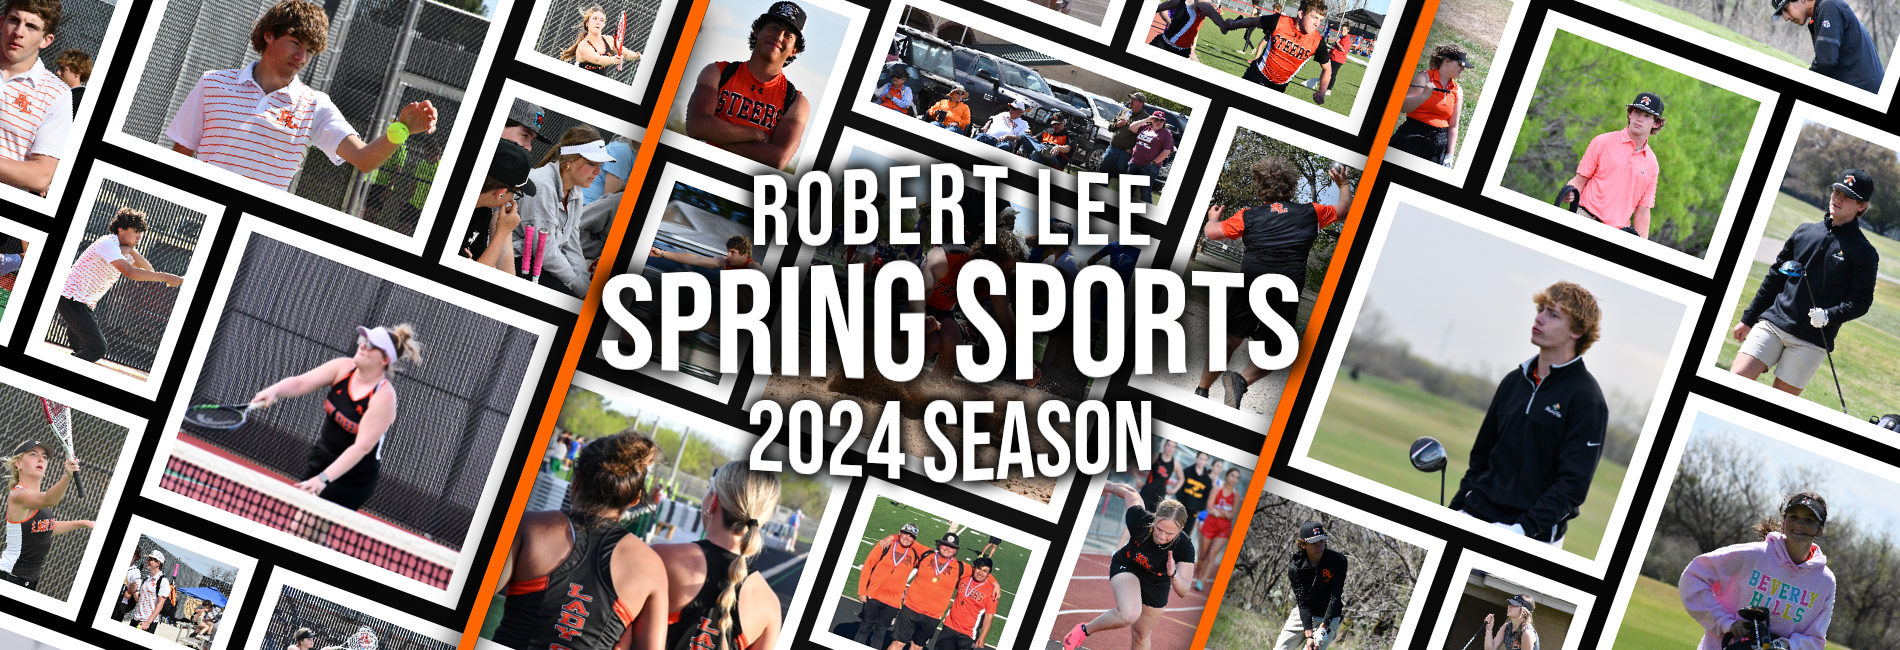 Spring Sports 2024 Season